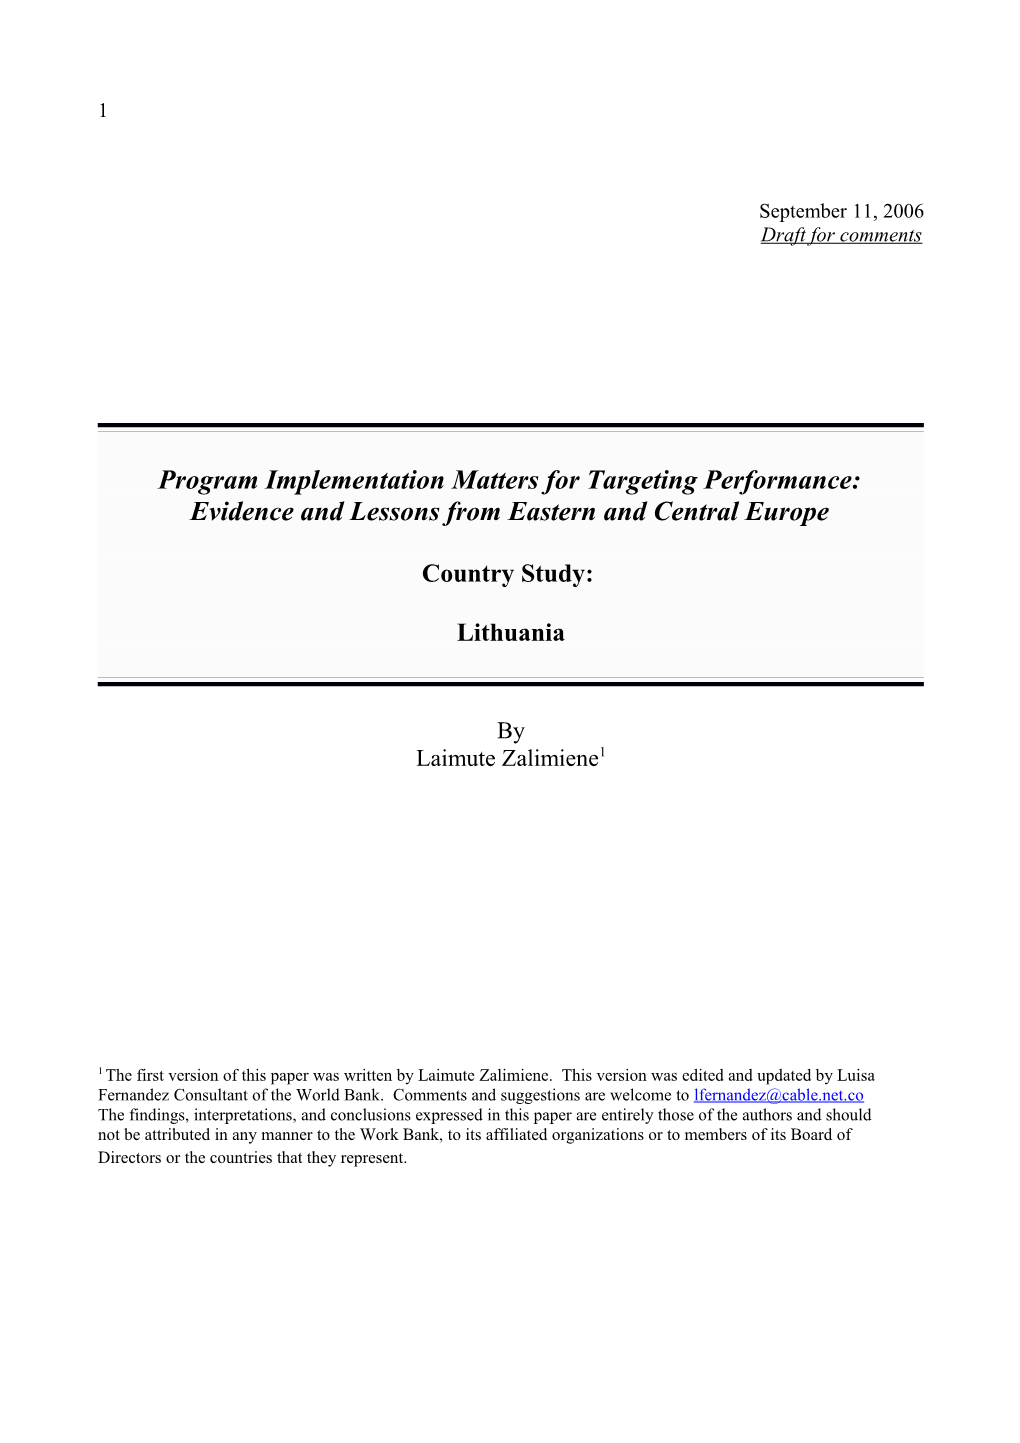 Program Implementation Matters for Targeting Performance